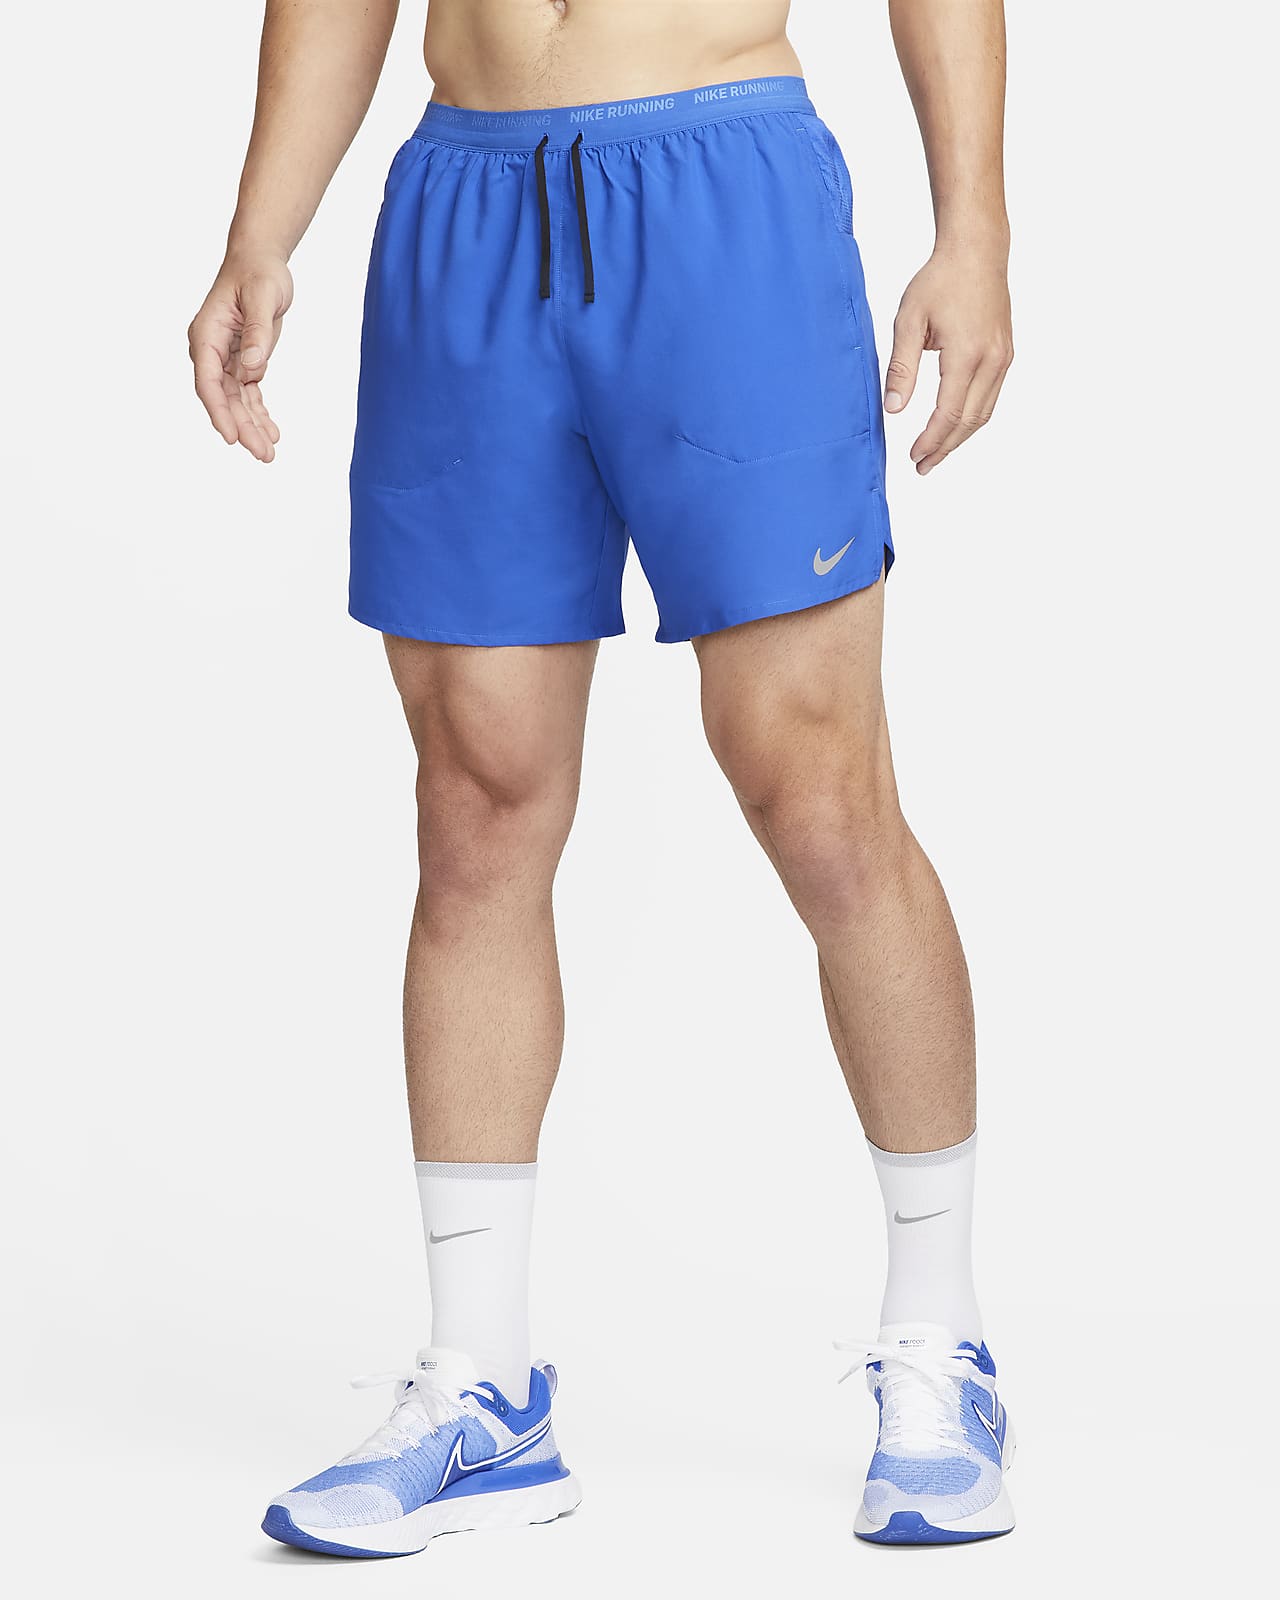 Shorts de running con forro de ropa interior Dri-FIT de 18 cm para hombre Nike Stride